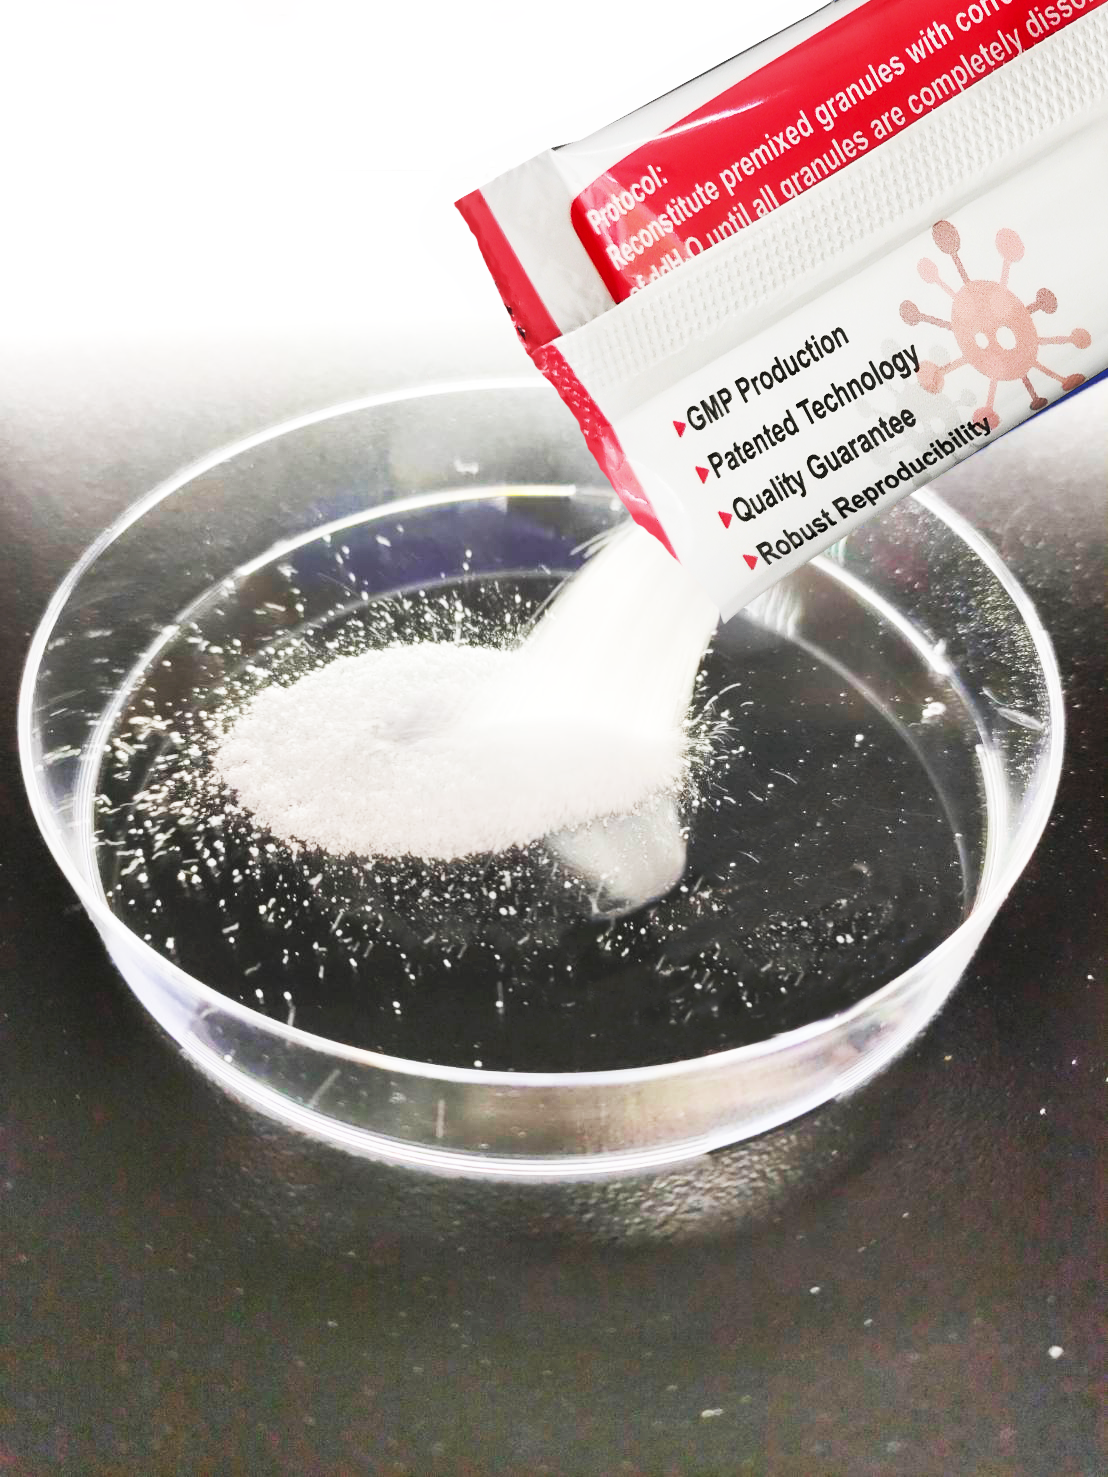 ACElute™ DPBS Instant Granules, pH7.4, 1L/pk